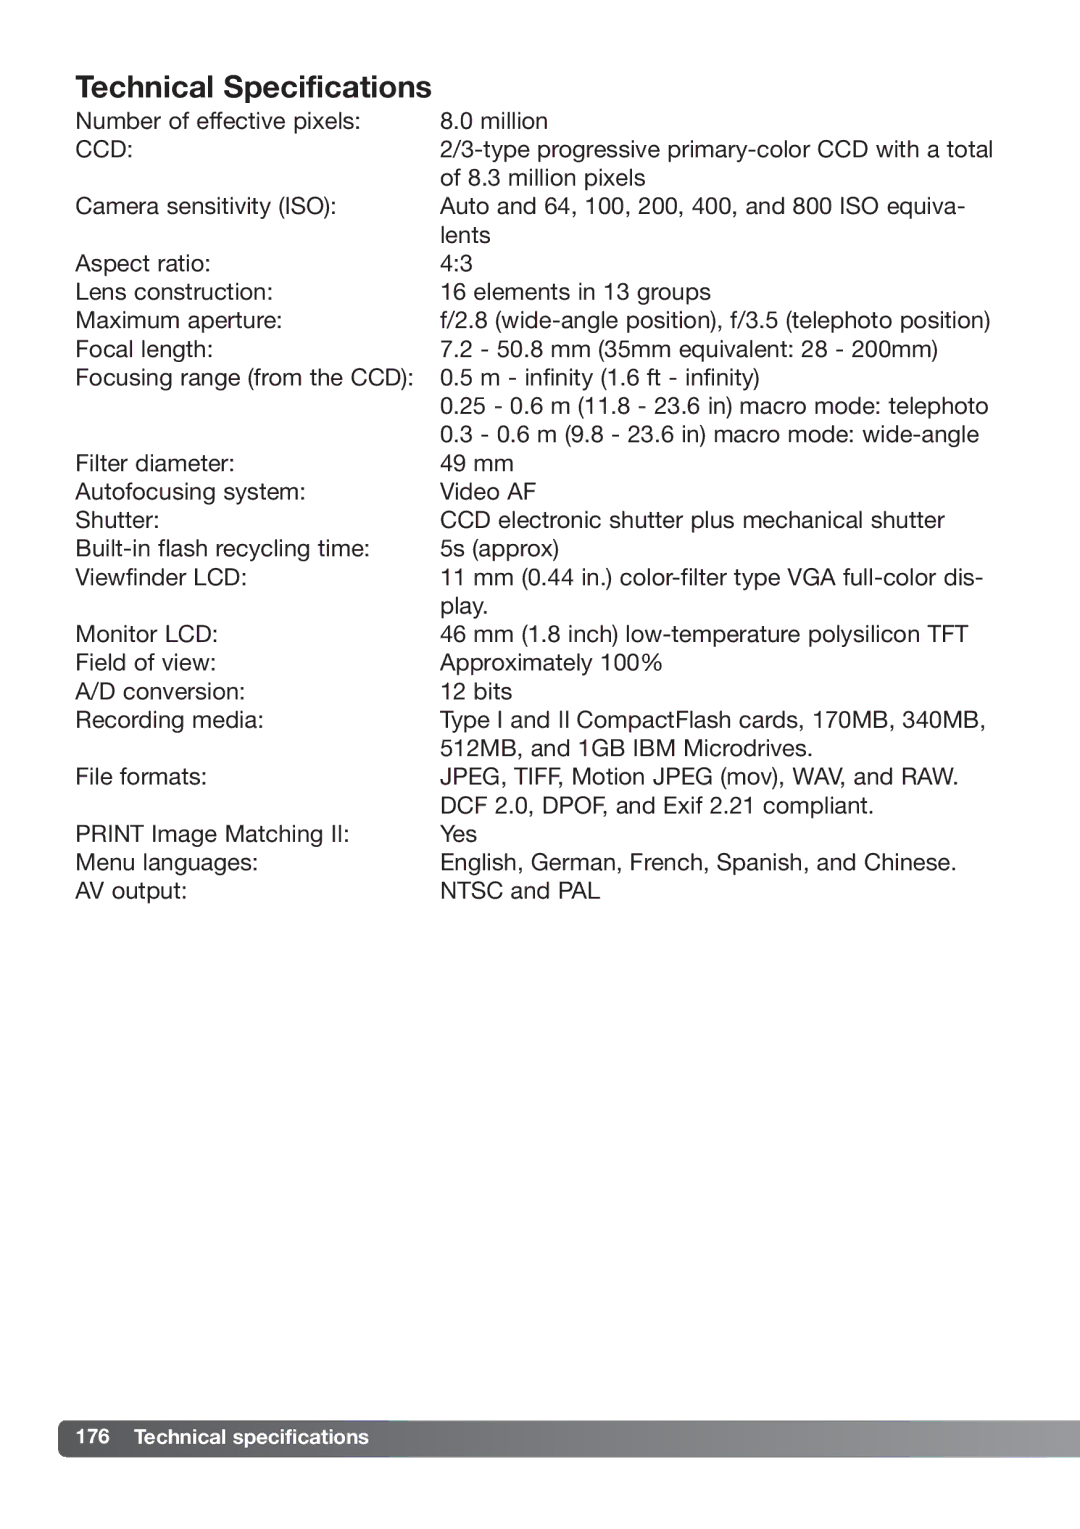 Konica Minolta DiMAGE_A2 instruction manual Technical Specifications, Technical specifications 